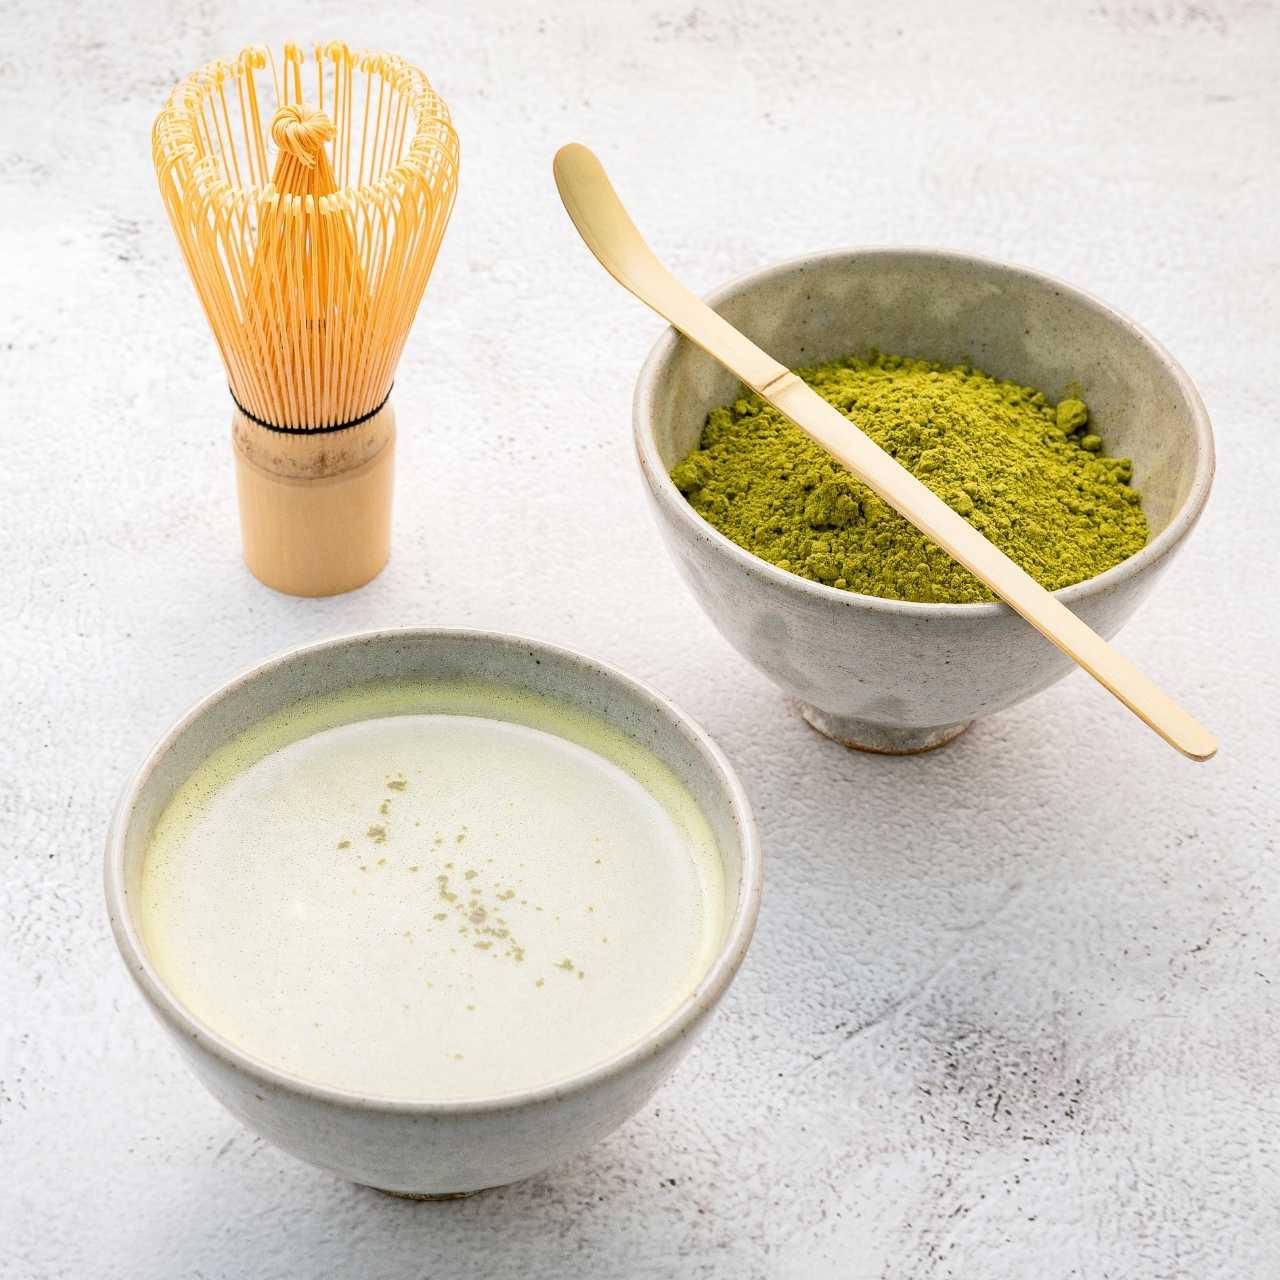 Bamboo whisk and spatula next to two bowls of matcha brewed and powder